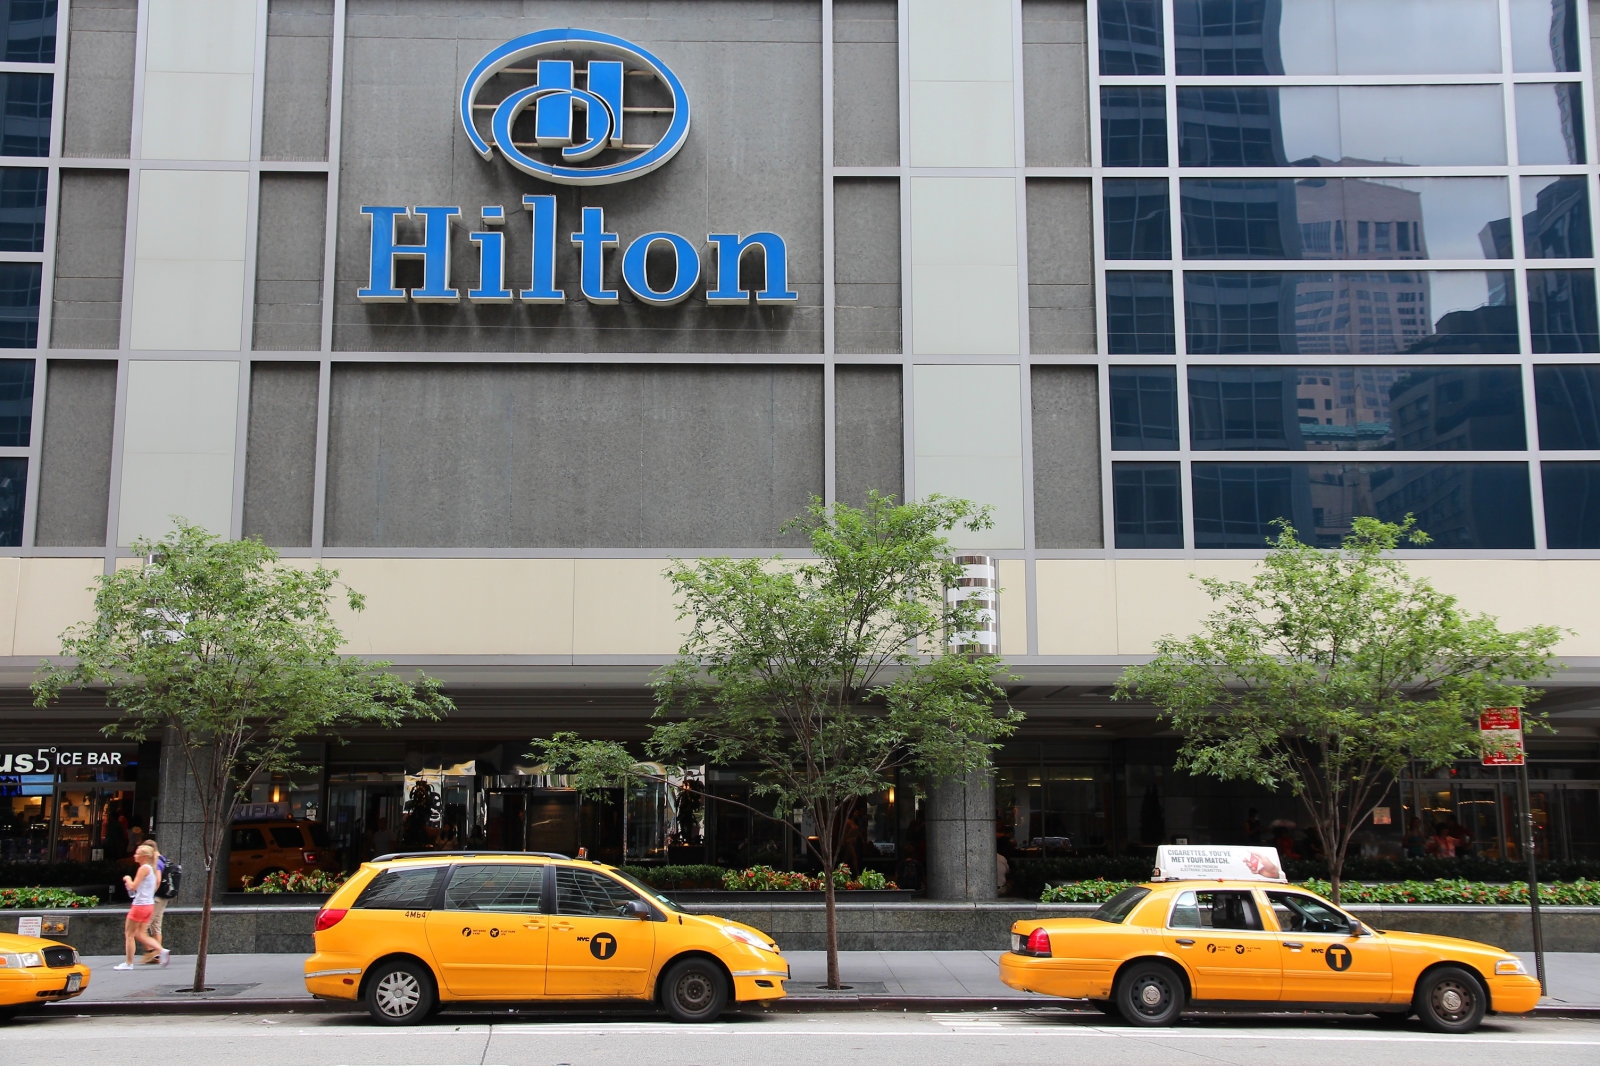 Hilton data breaches lead to $700,000 penalty | DeviceDaily.com